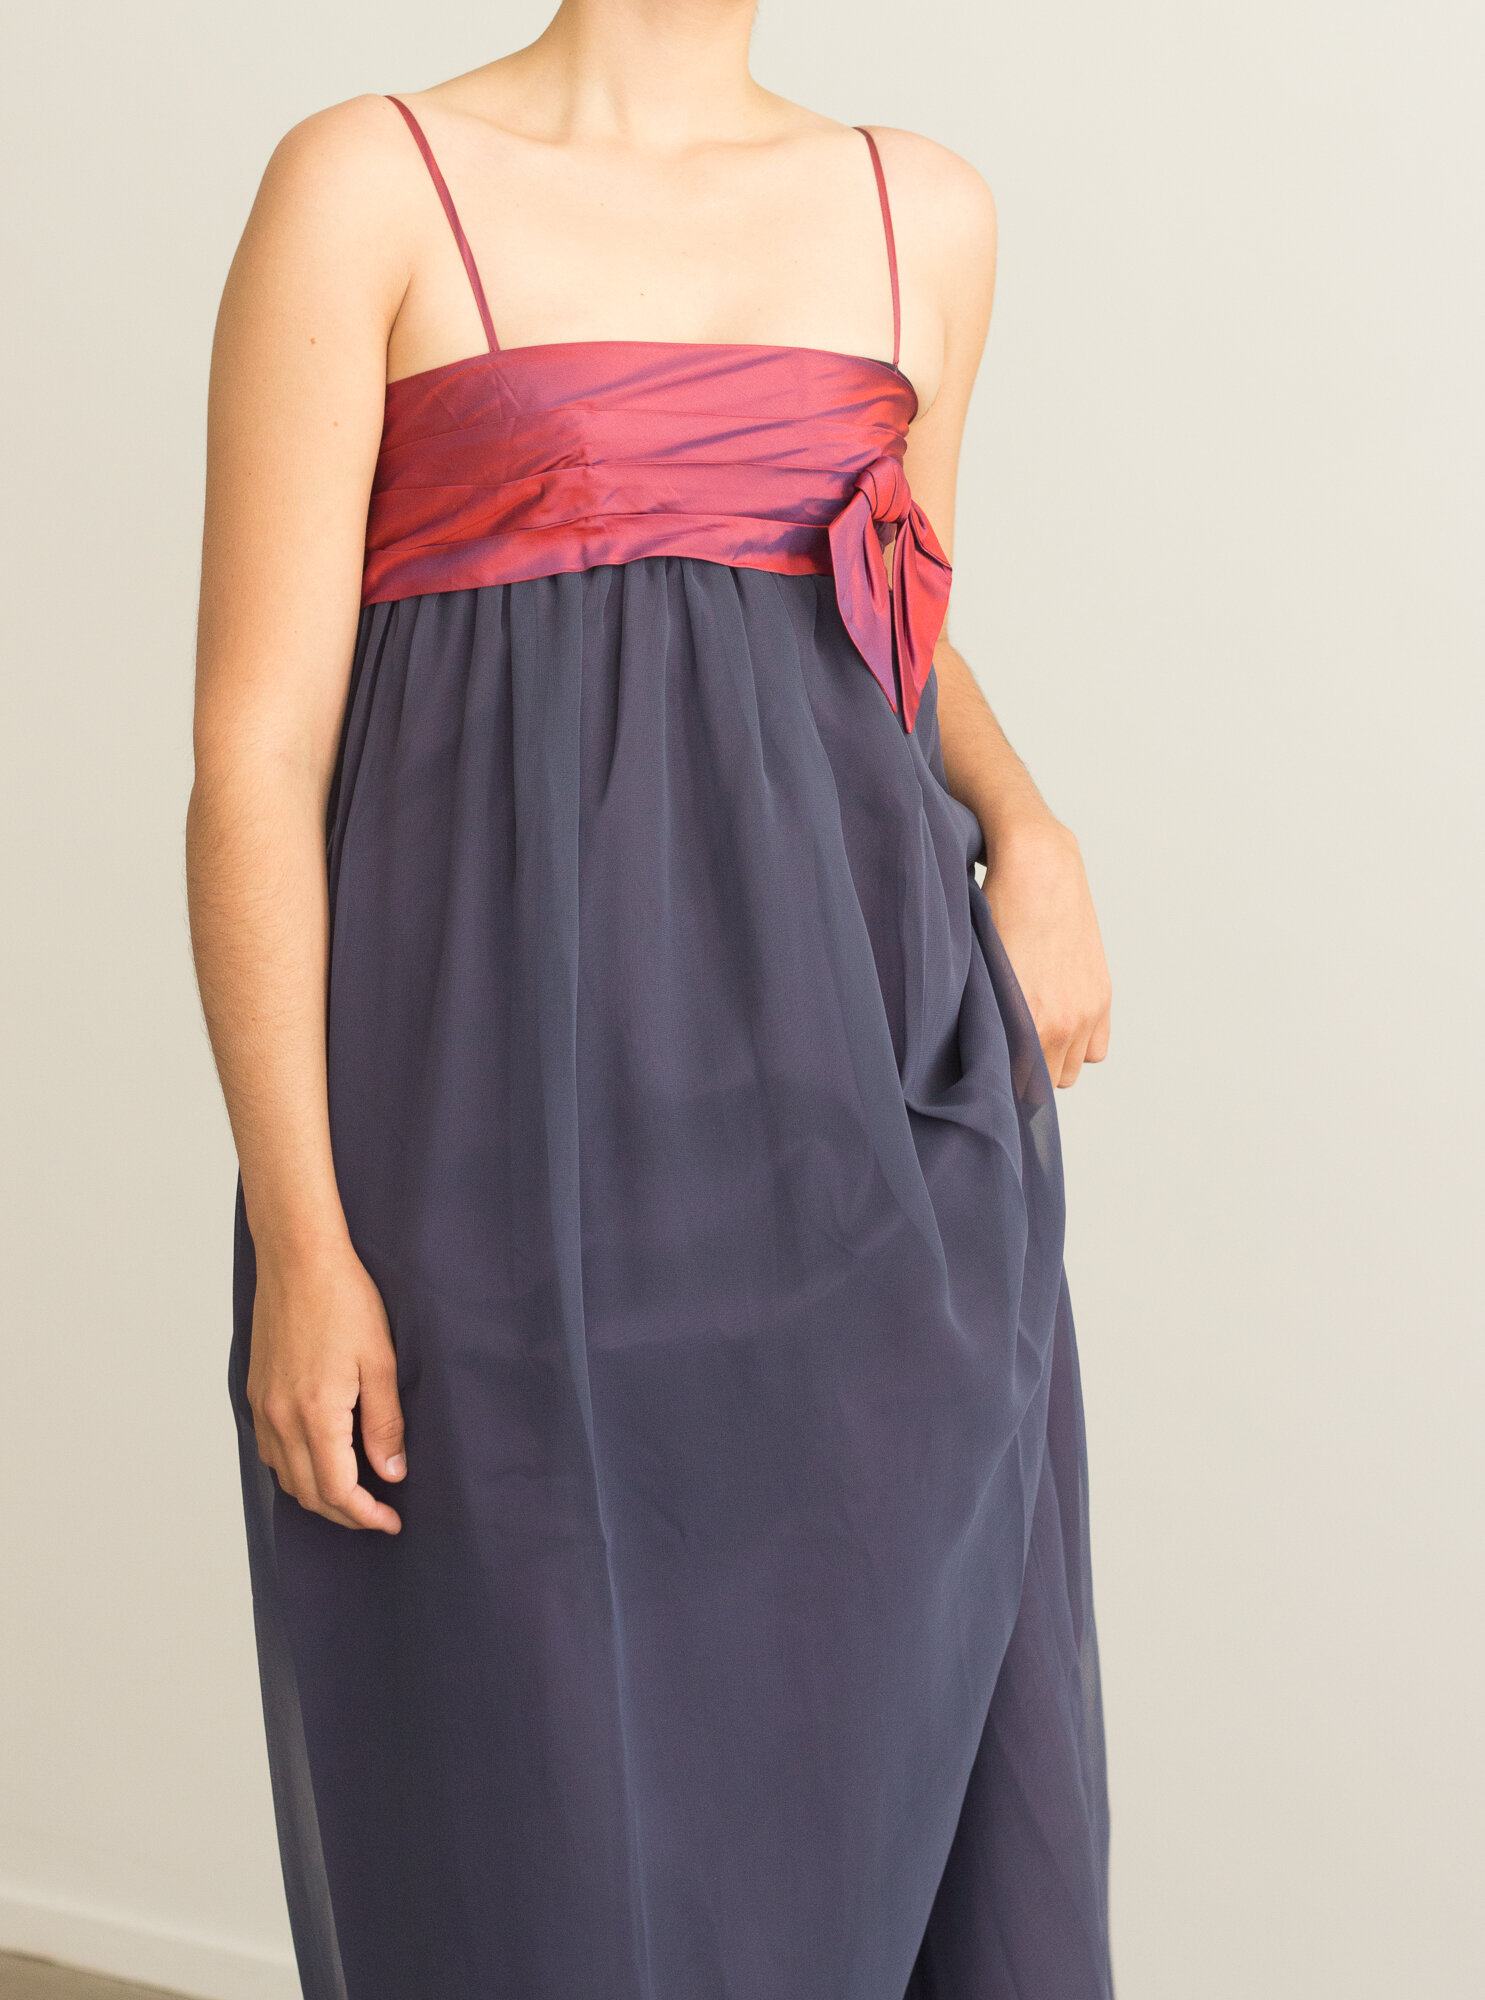 Buy Hot Berries Women's Empire Waist Dress at Amazon.in